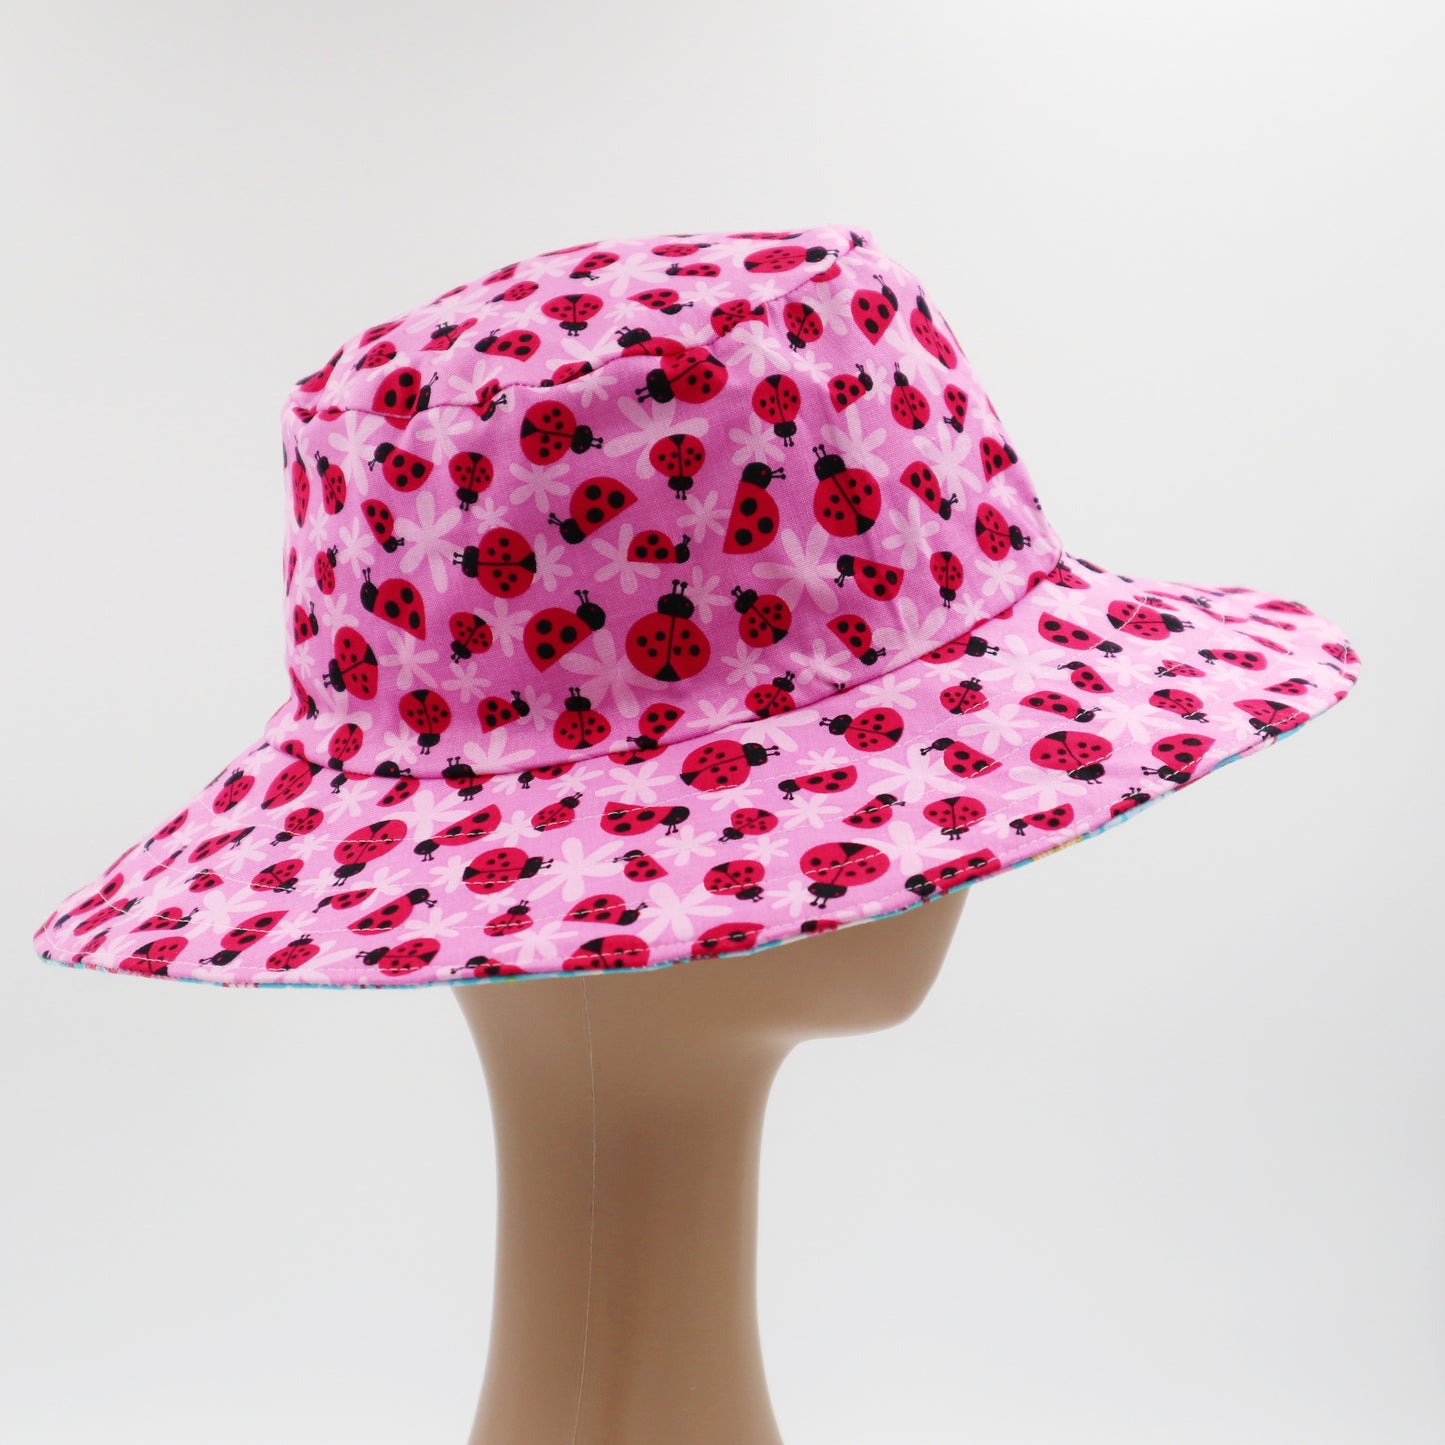 Reversible Sun Hat - Ladies & Girls sizes - butterfly, ladybug